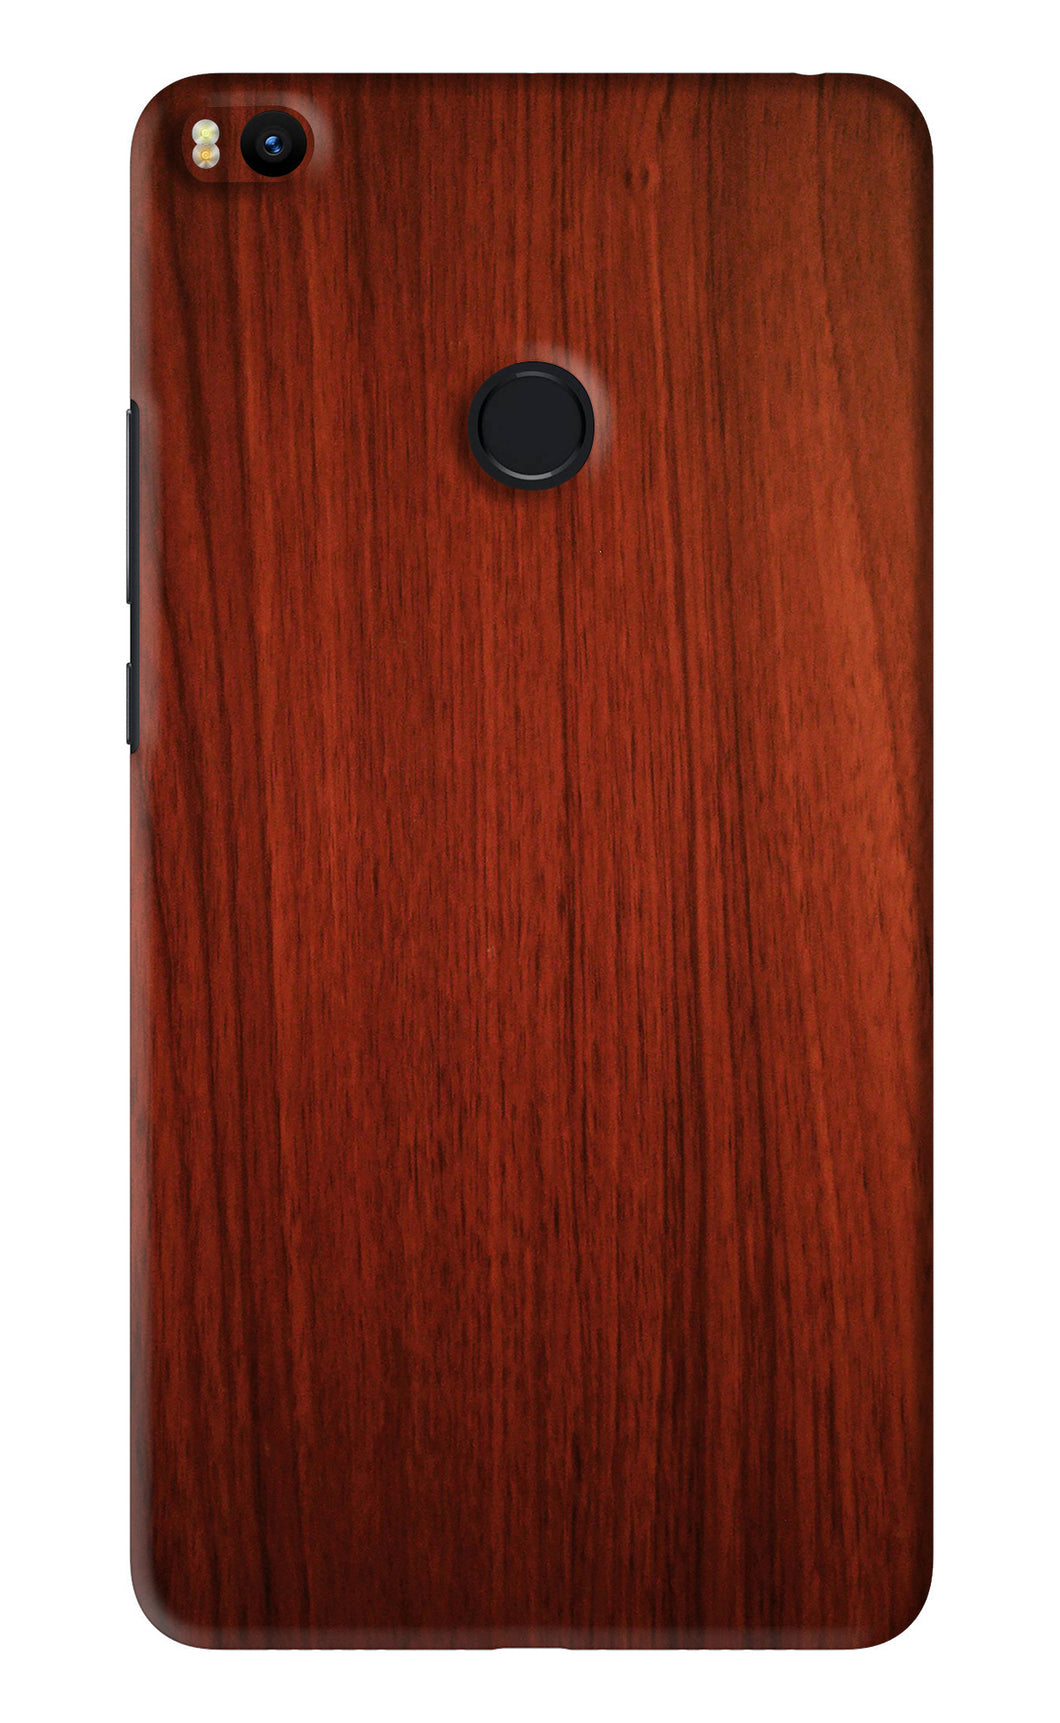 Wooden Plain Pattern Xiaomi Redmi Mi Max 2 Back Skin Wrap